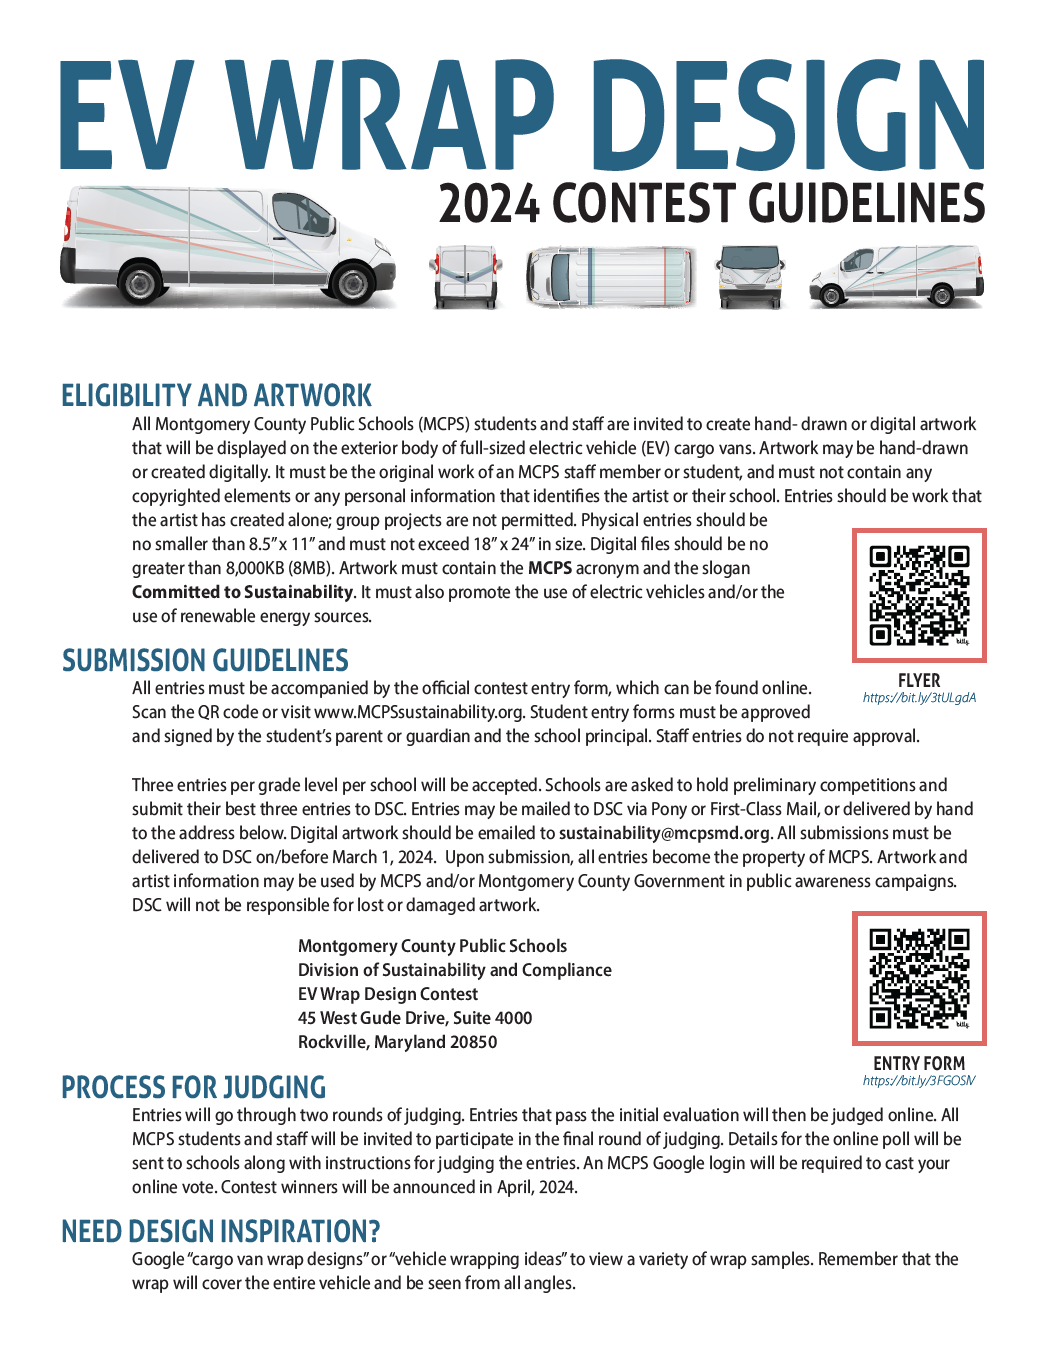 EV contest guidelines